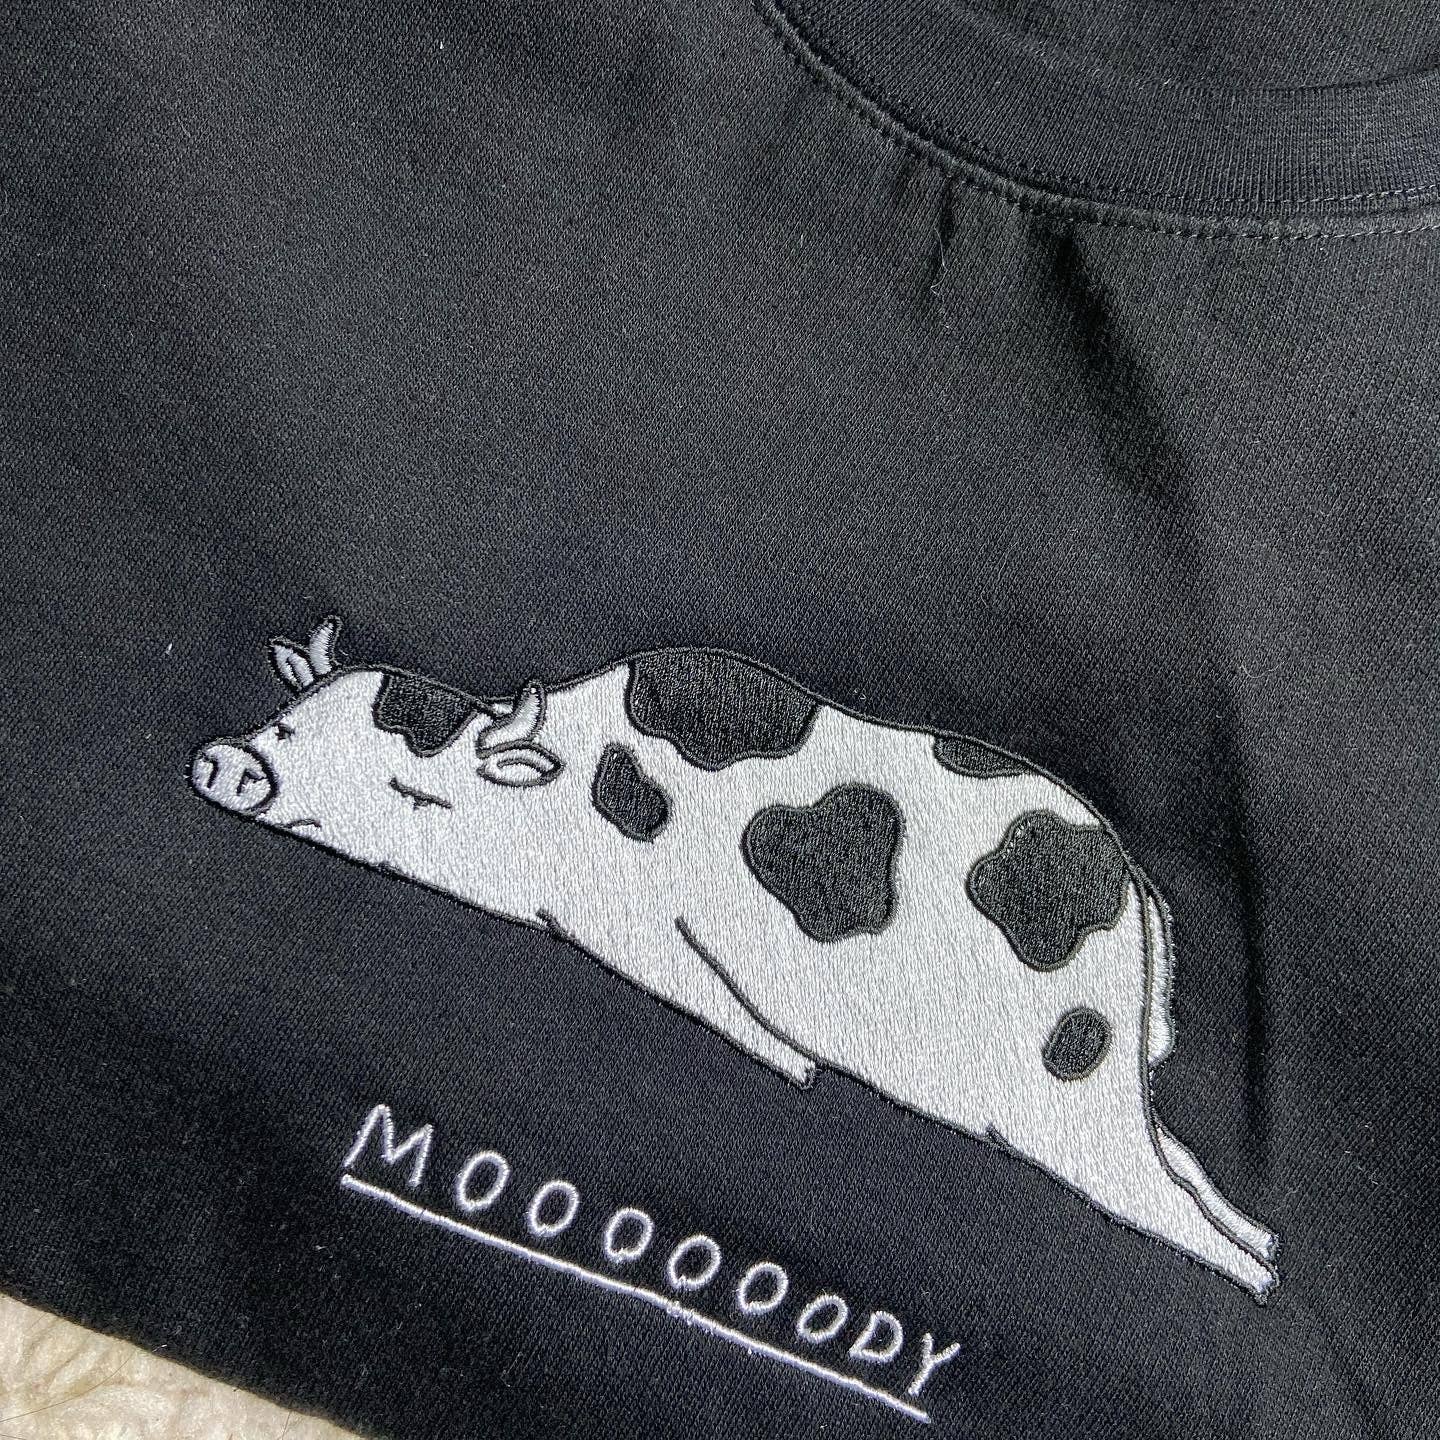 Moody cow design black & white